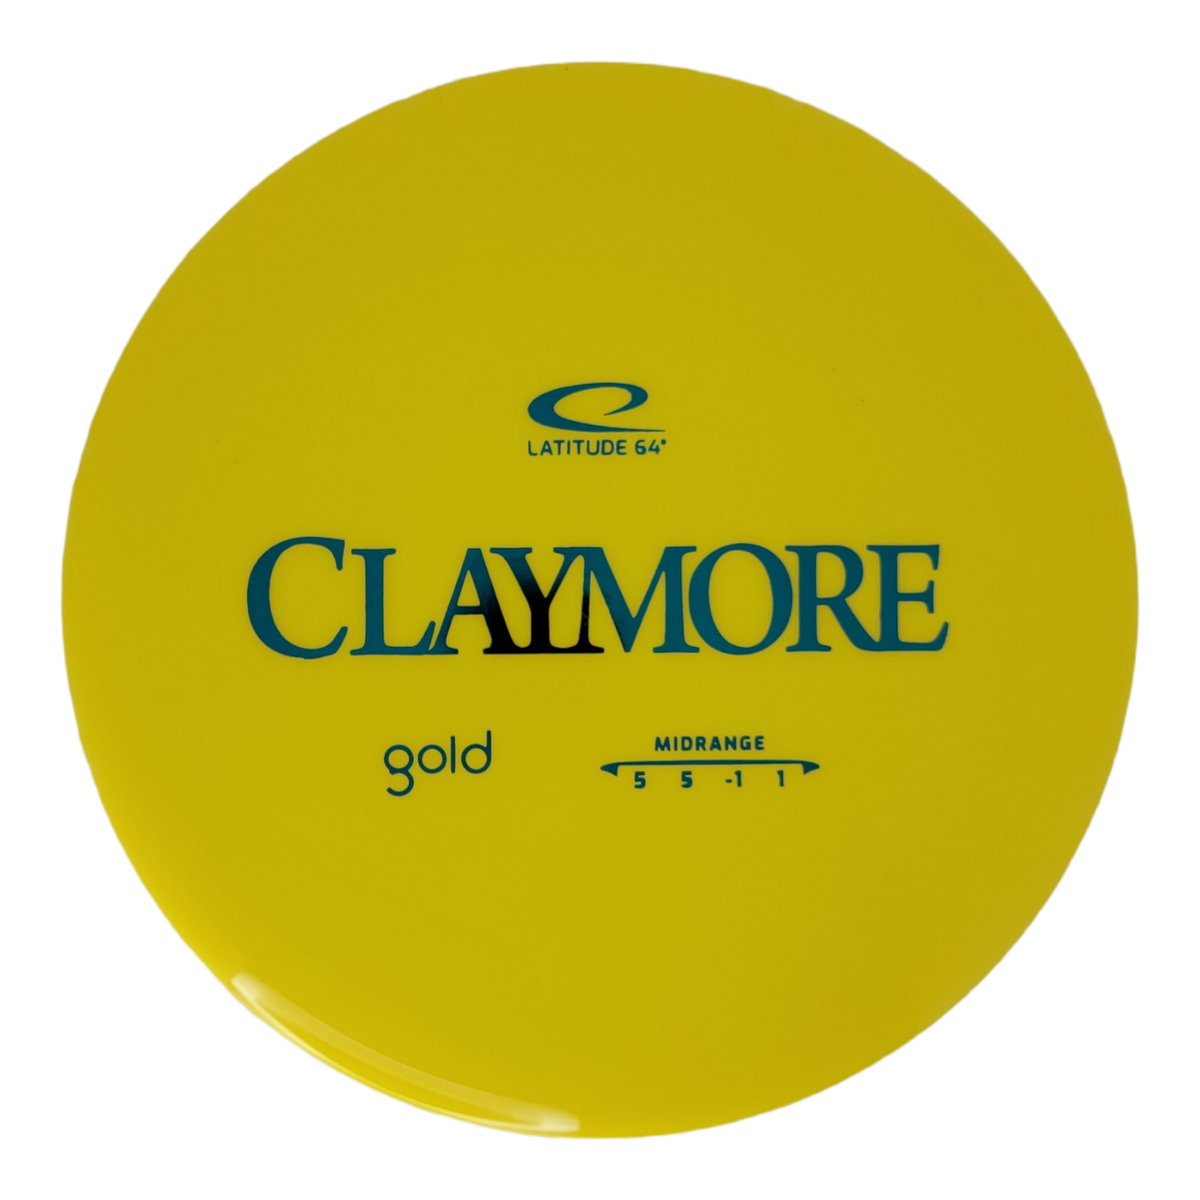 Latitude 64 Gold Claymore